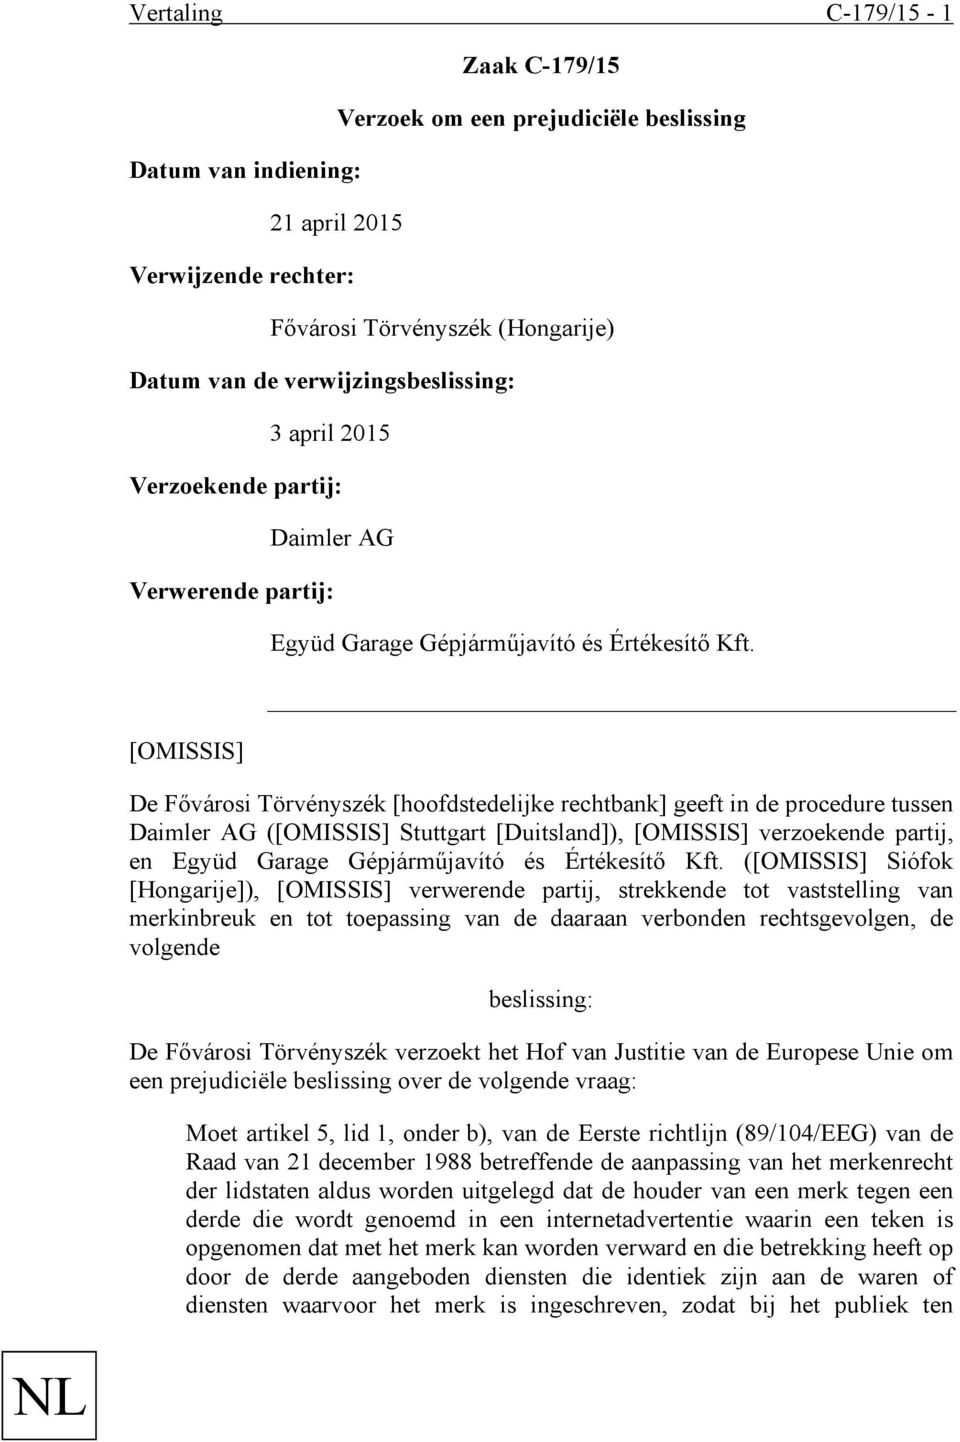 [OMISSIS] De Fővárosi Törvényszék [hoofdstedelijke rechtbank] geeft in de procedure tussen Daimler AG ([OMISSIS] Stuttgart [Duitsland]), [OMISSIS] verzoekende partij, en Együd Garage Gépjárműjavító